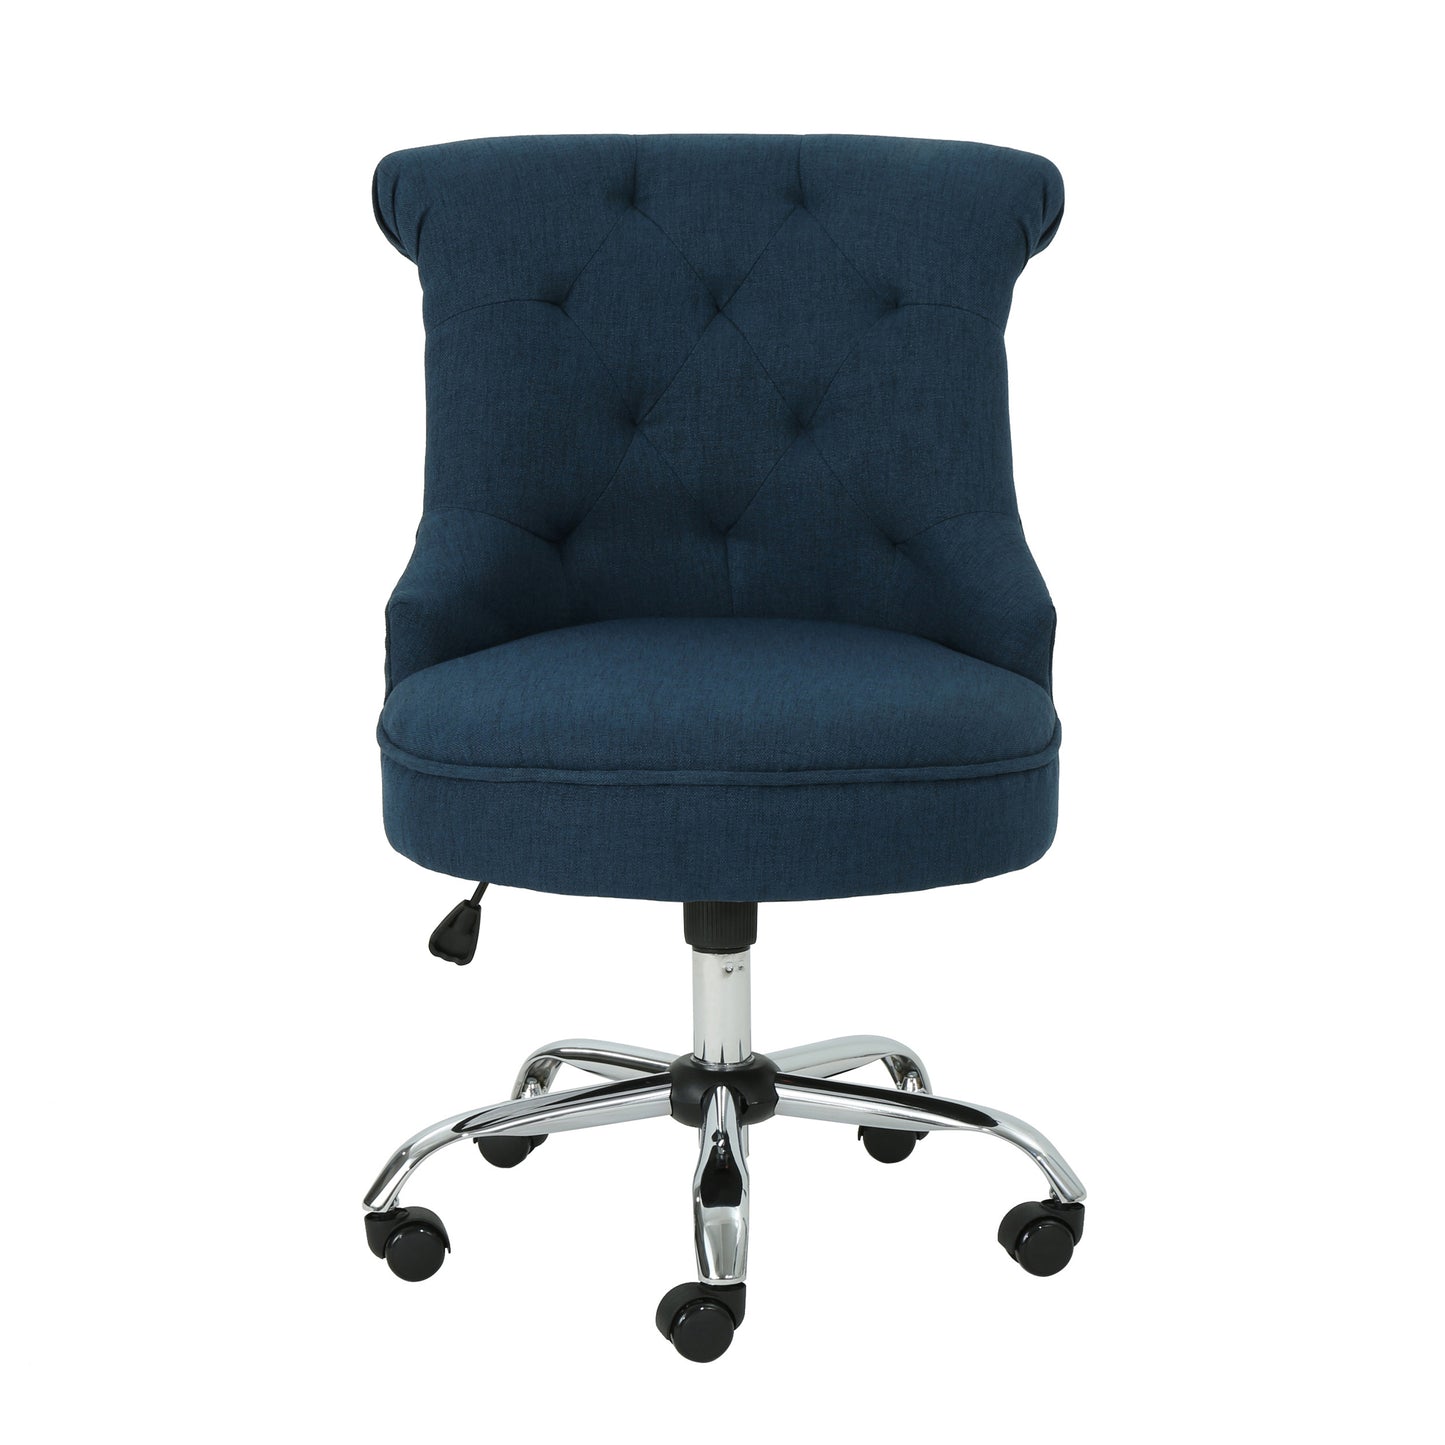 Tyesha Home Office Fabric Desk Chair